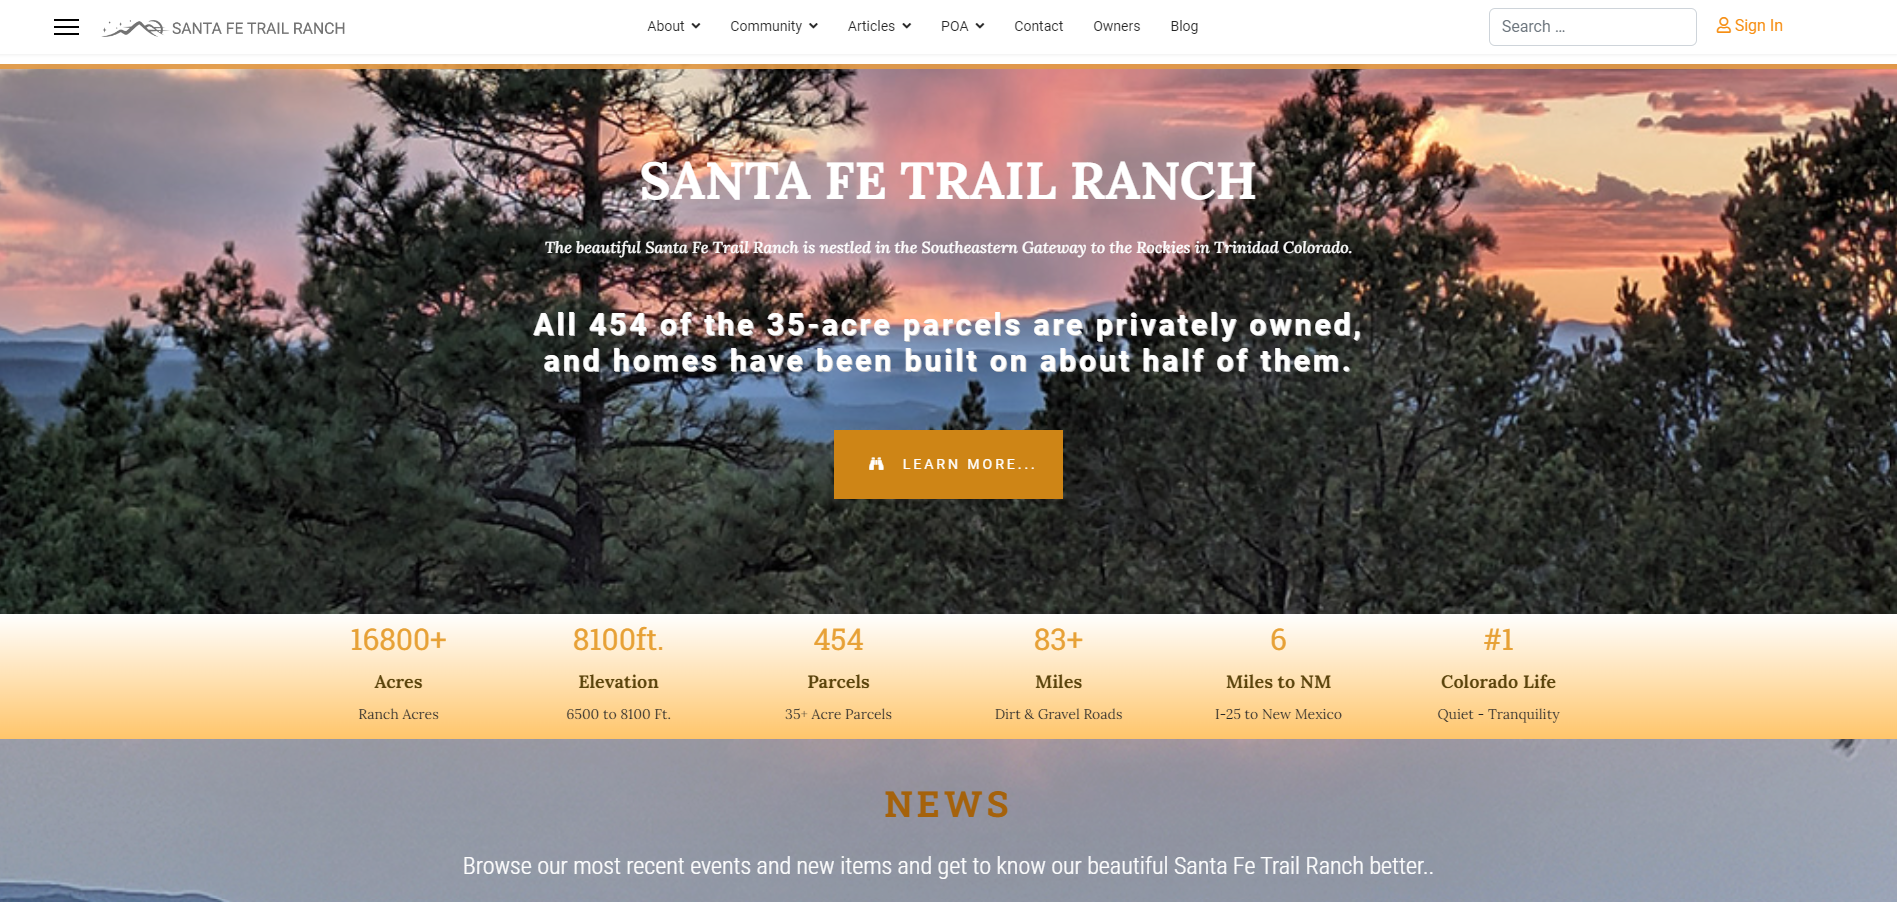 New Santa Fe Trail Ranch Website - Coming Soon!